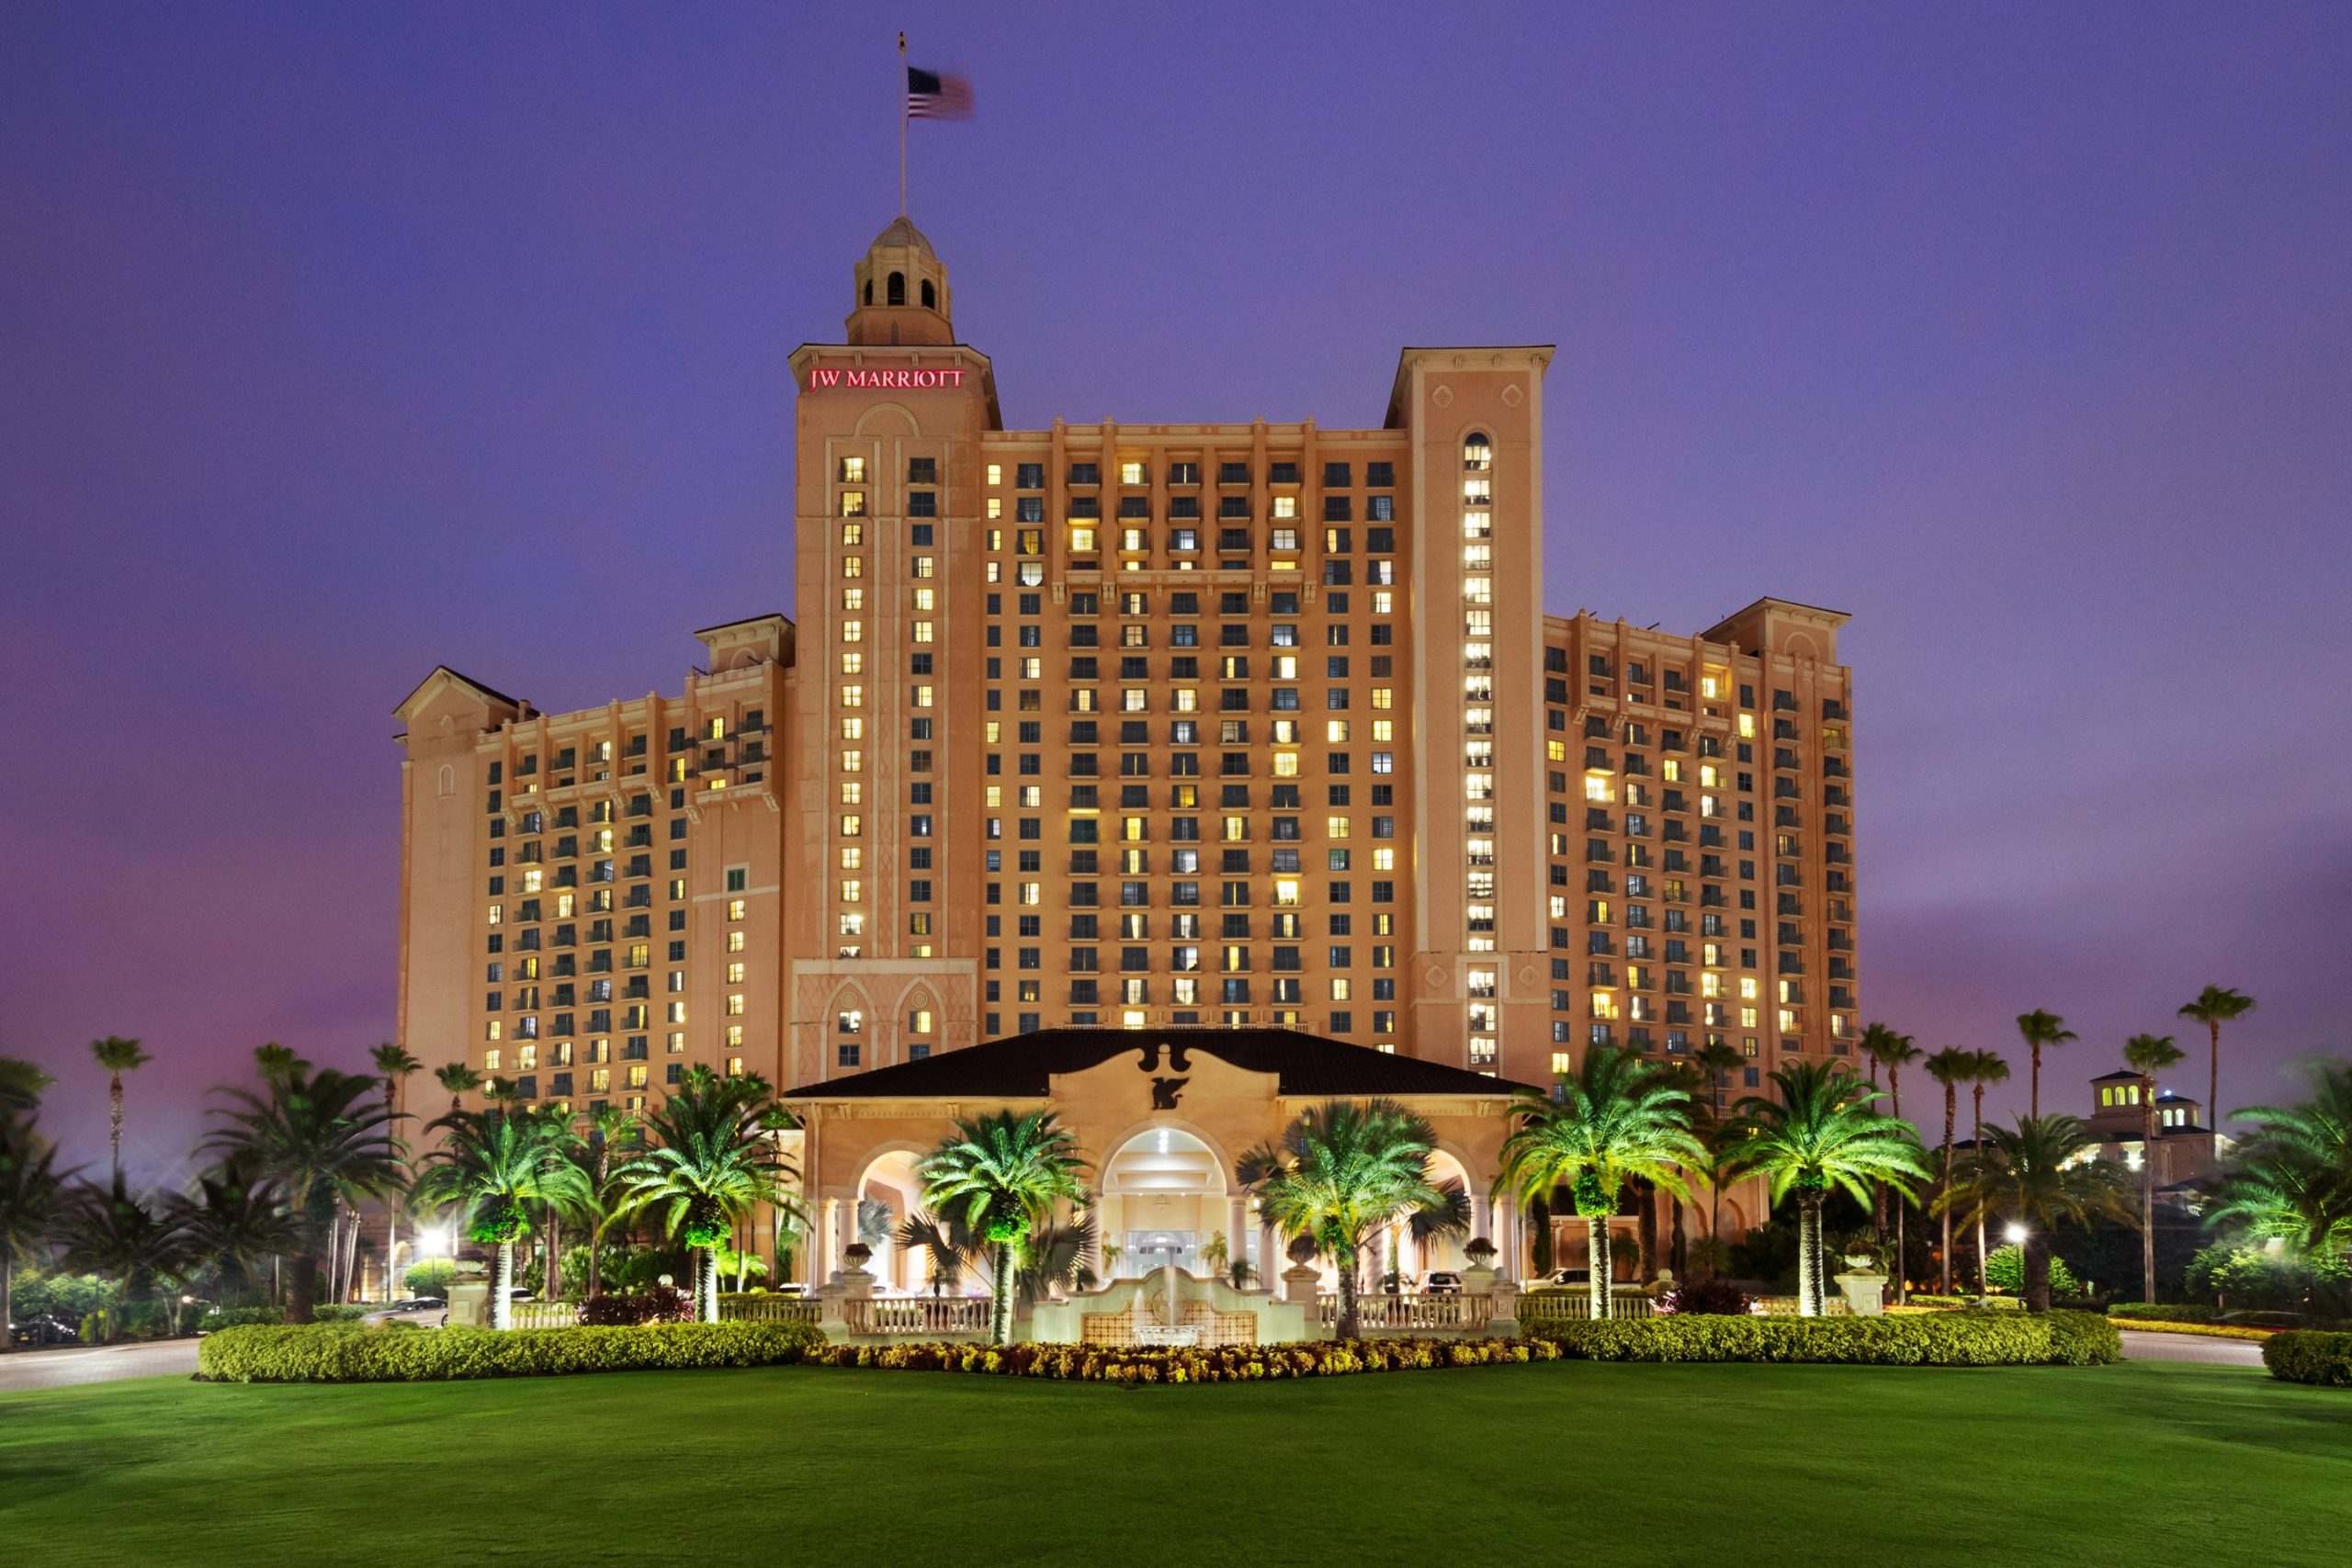 JW Marriott Grande Lakes, Orlando Exterior Hotel with palm trees around.